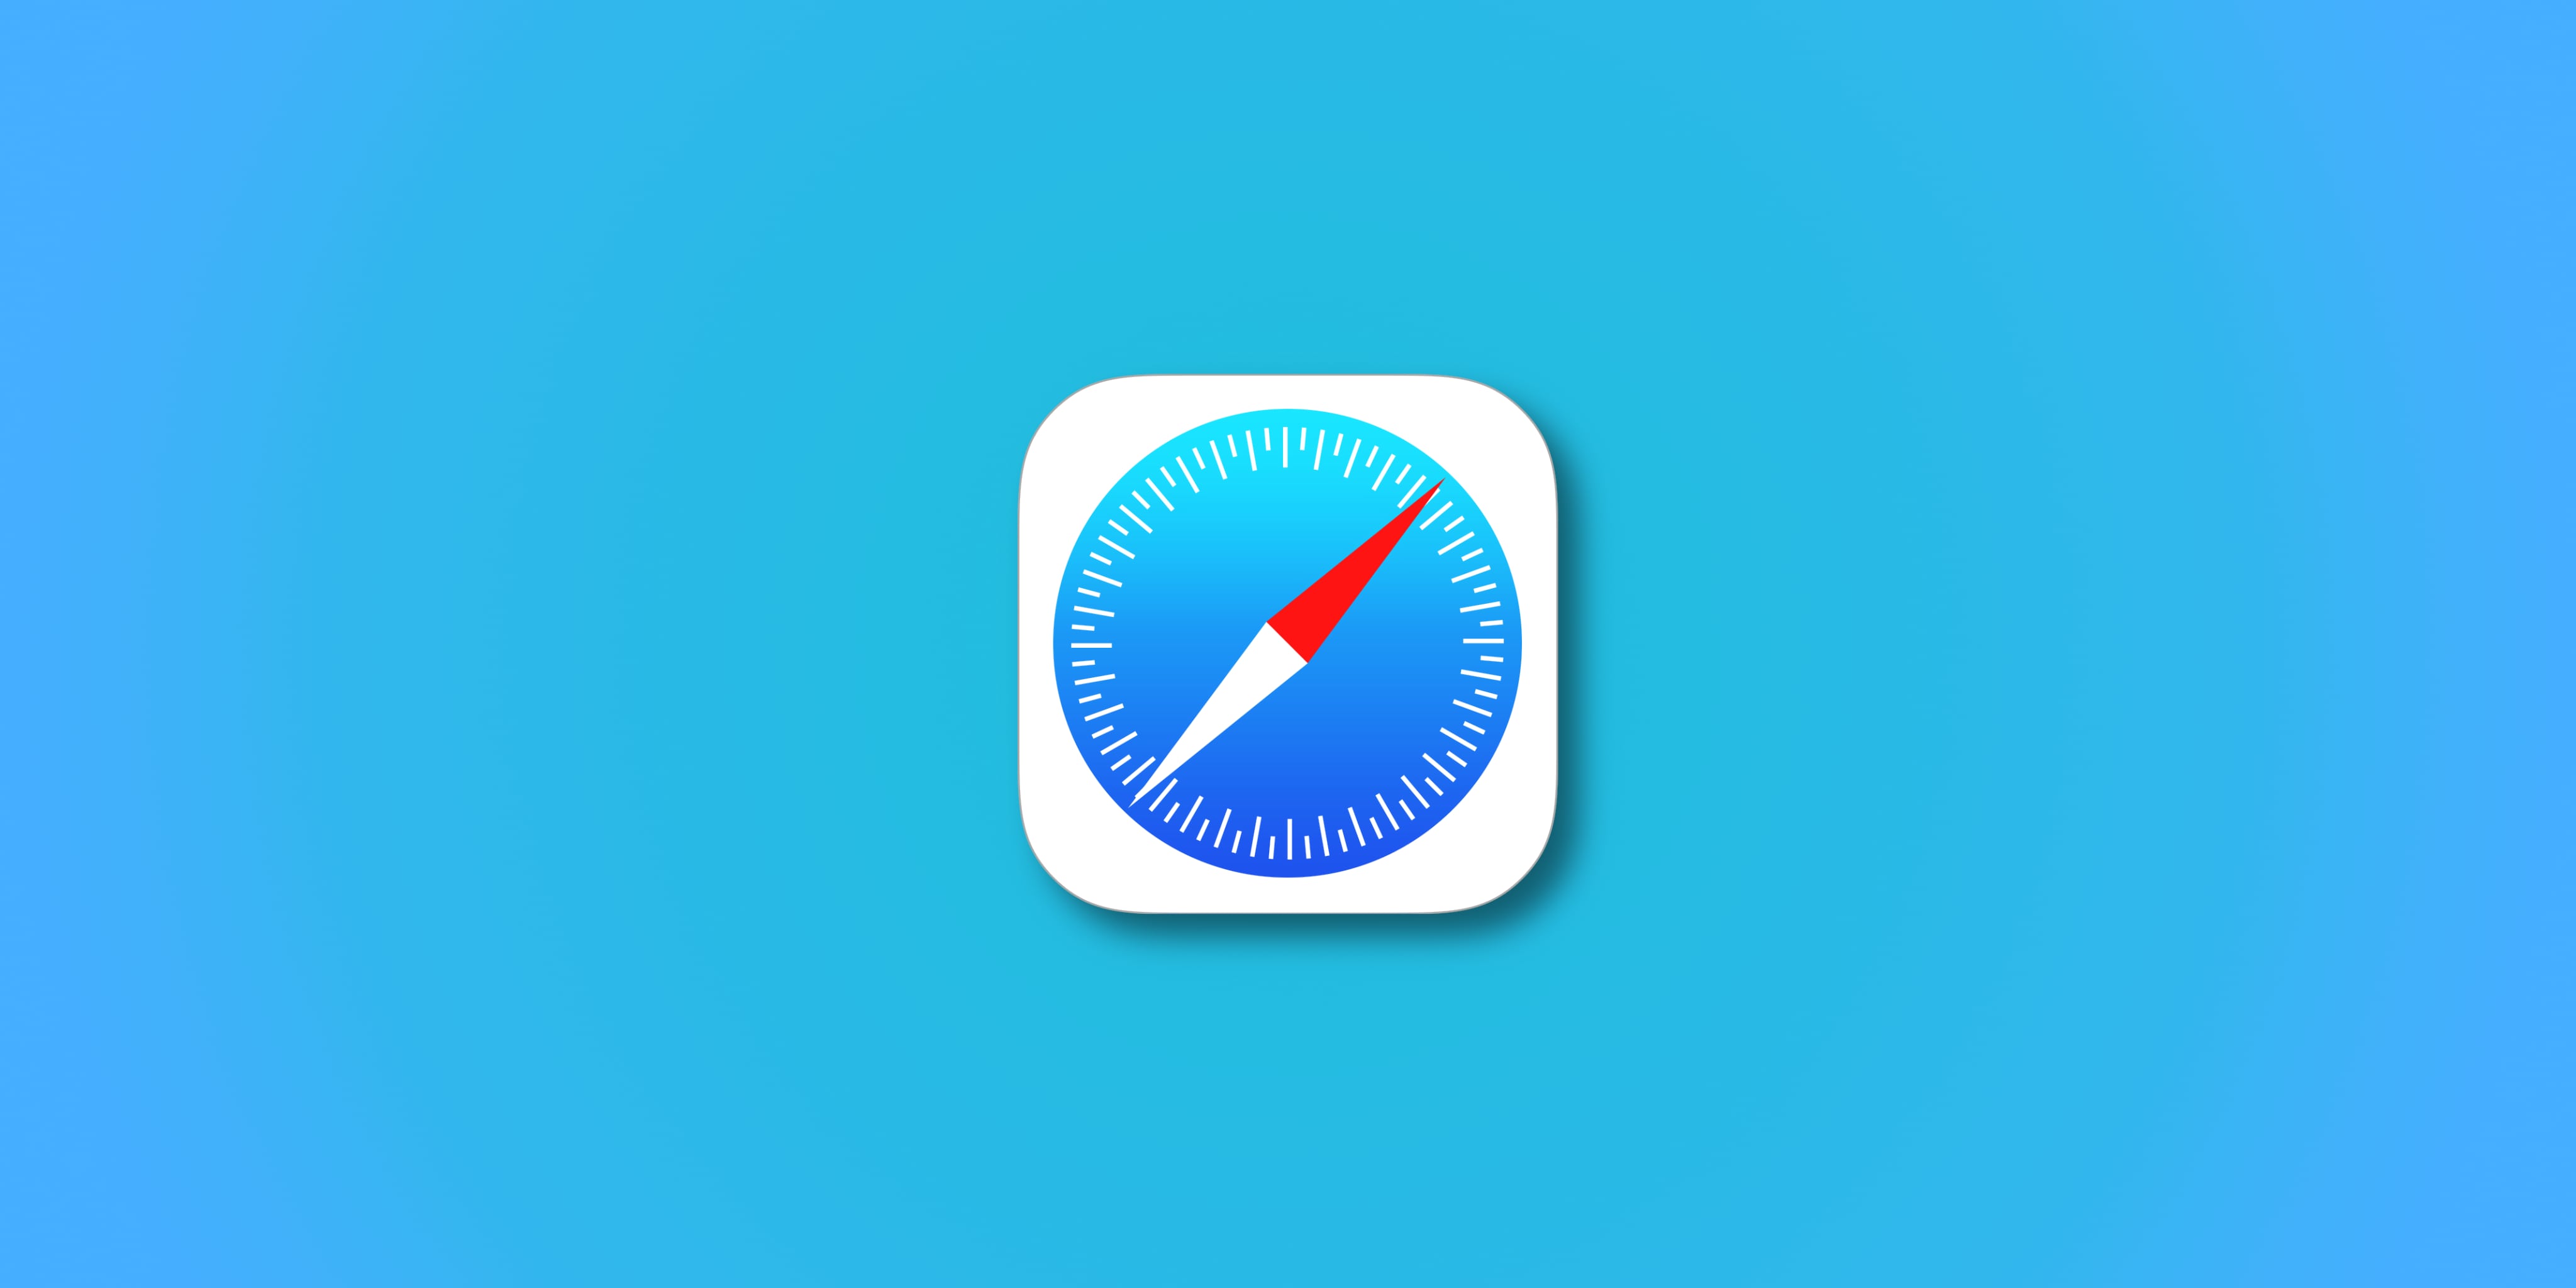 Illustration showing an Apple Safari logo set against a blue gradient background